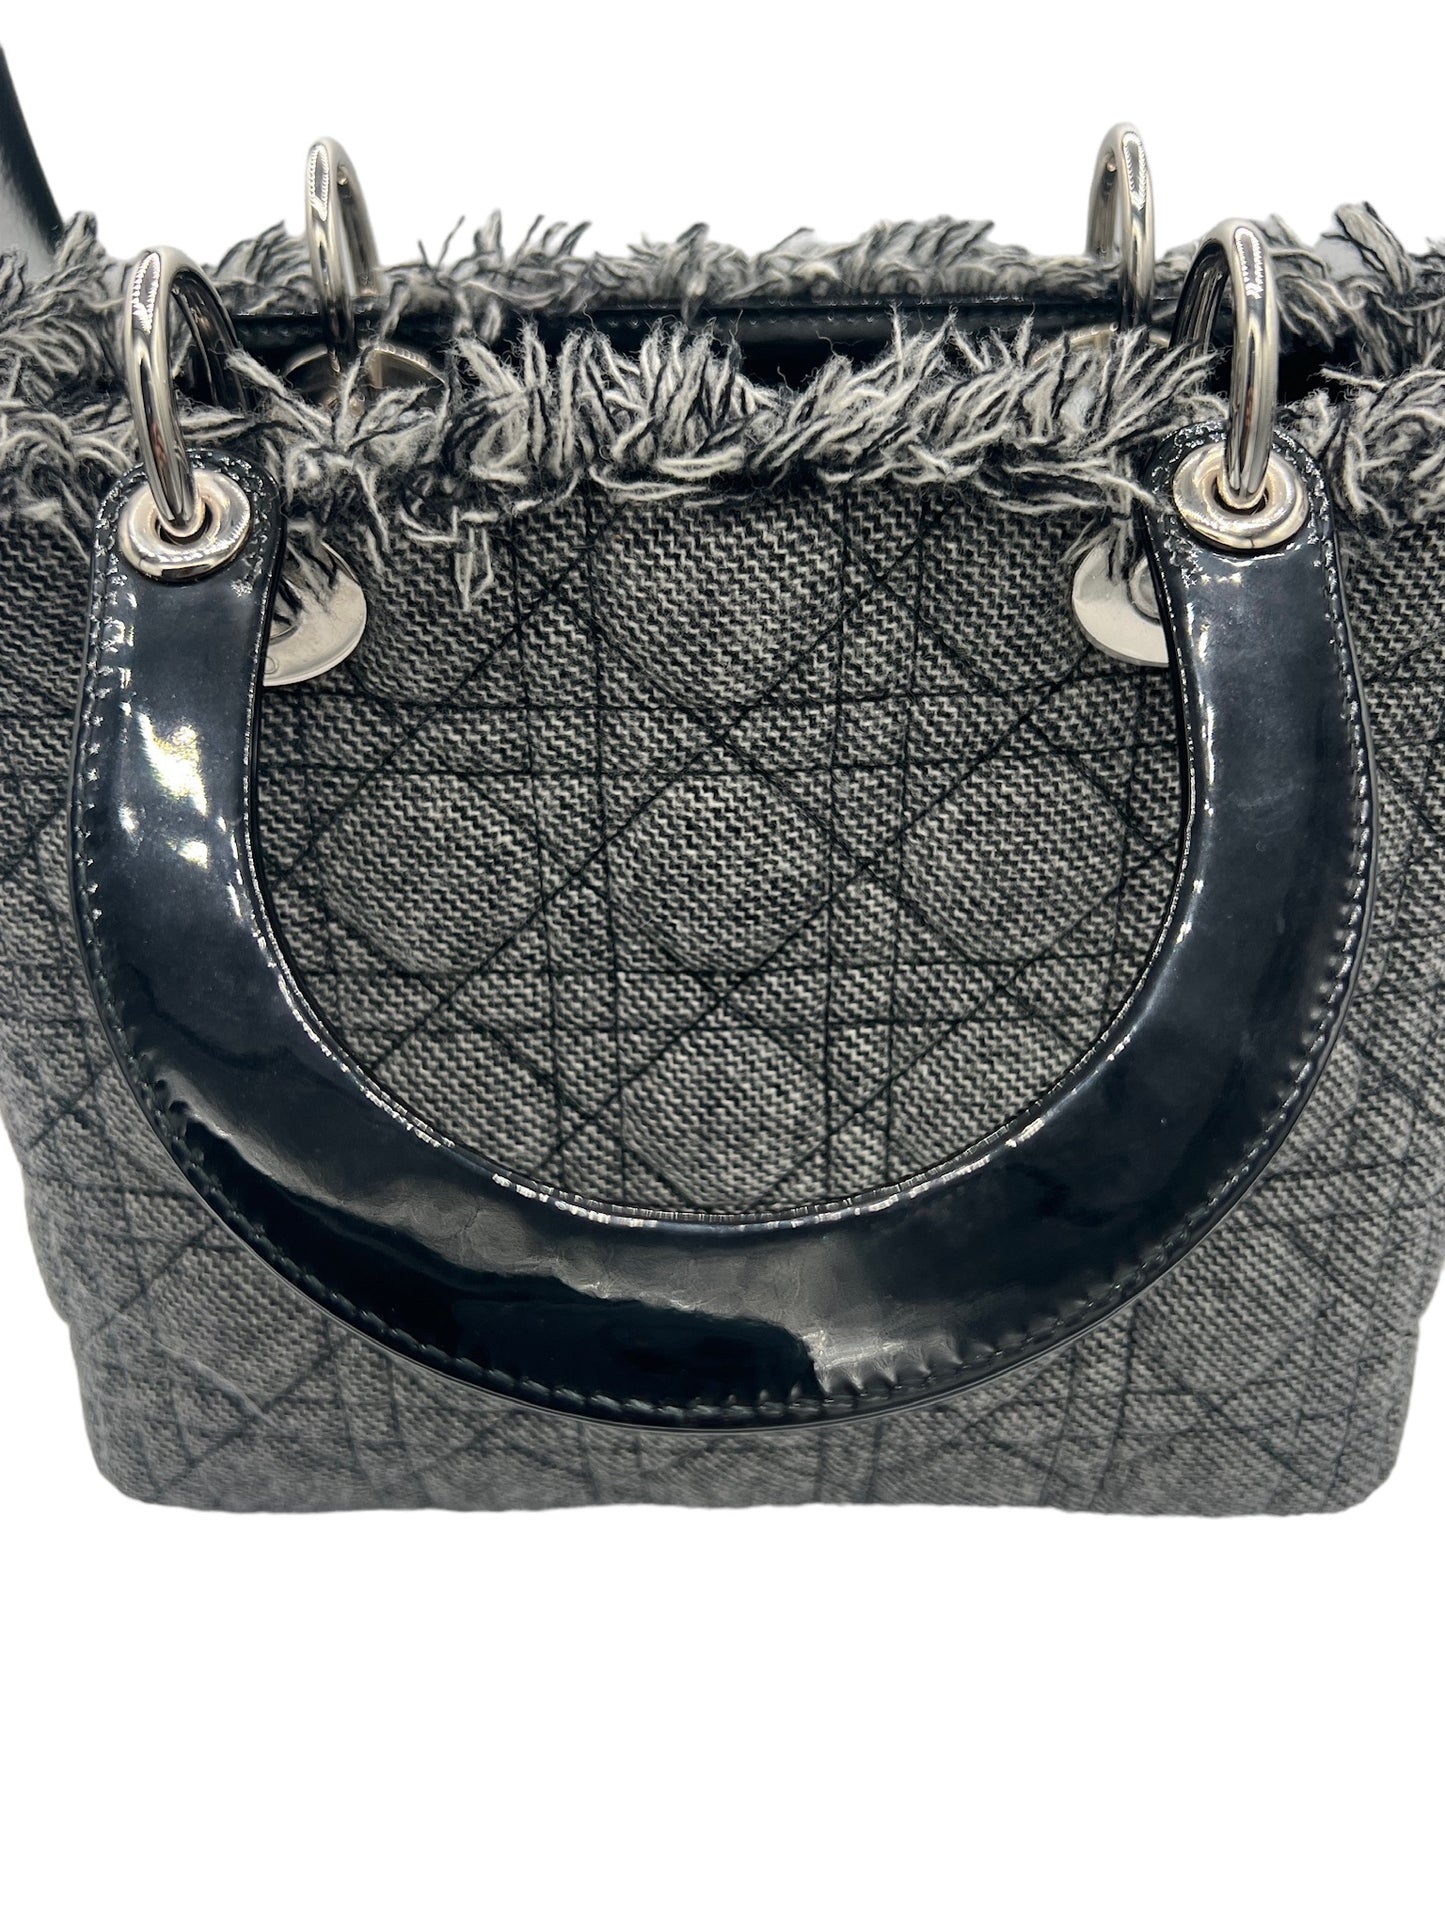 DIOR - Lady Dior Wool Patent Leather Medium Bag Handbag